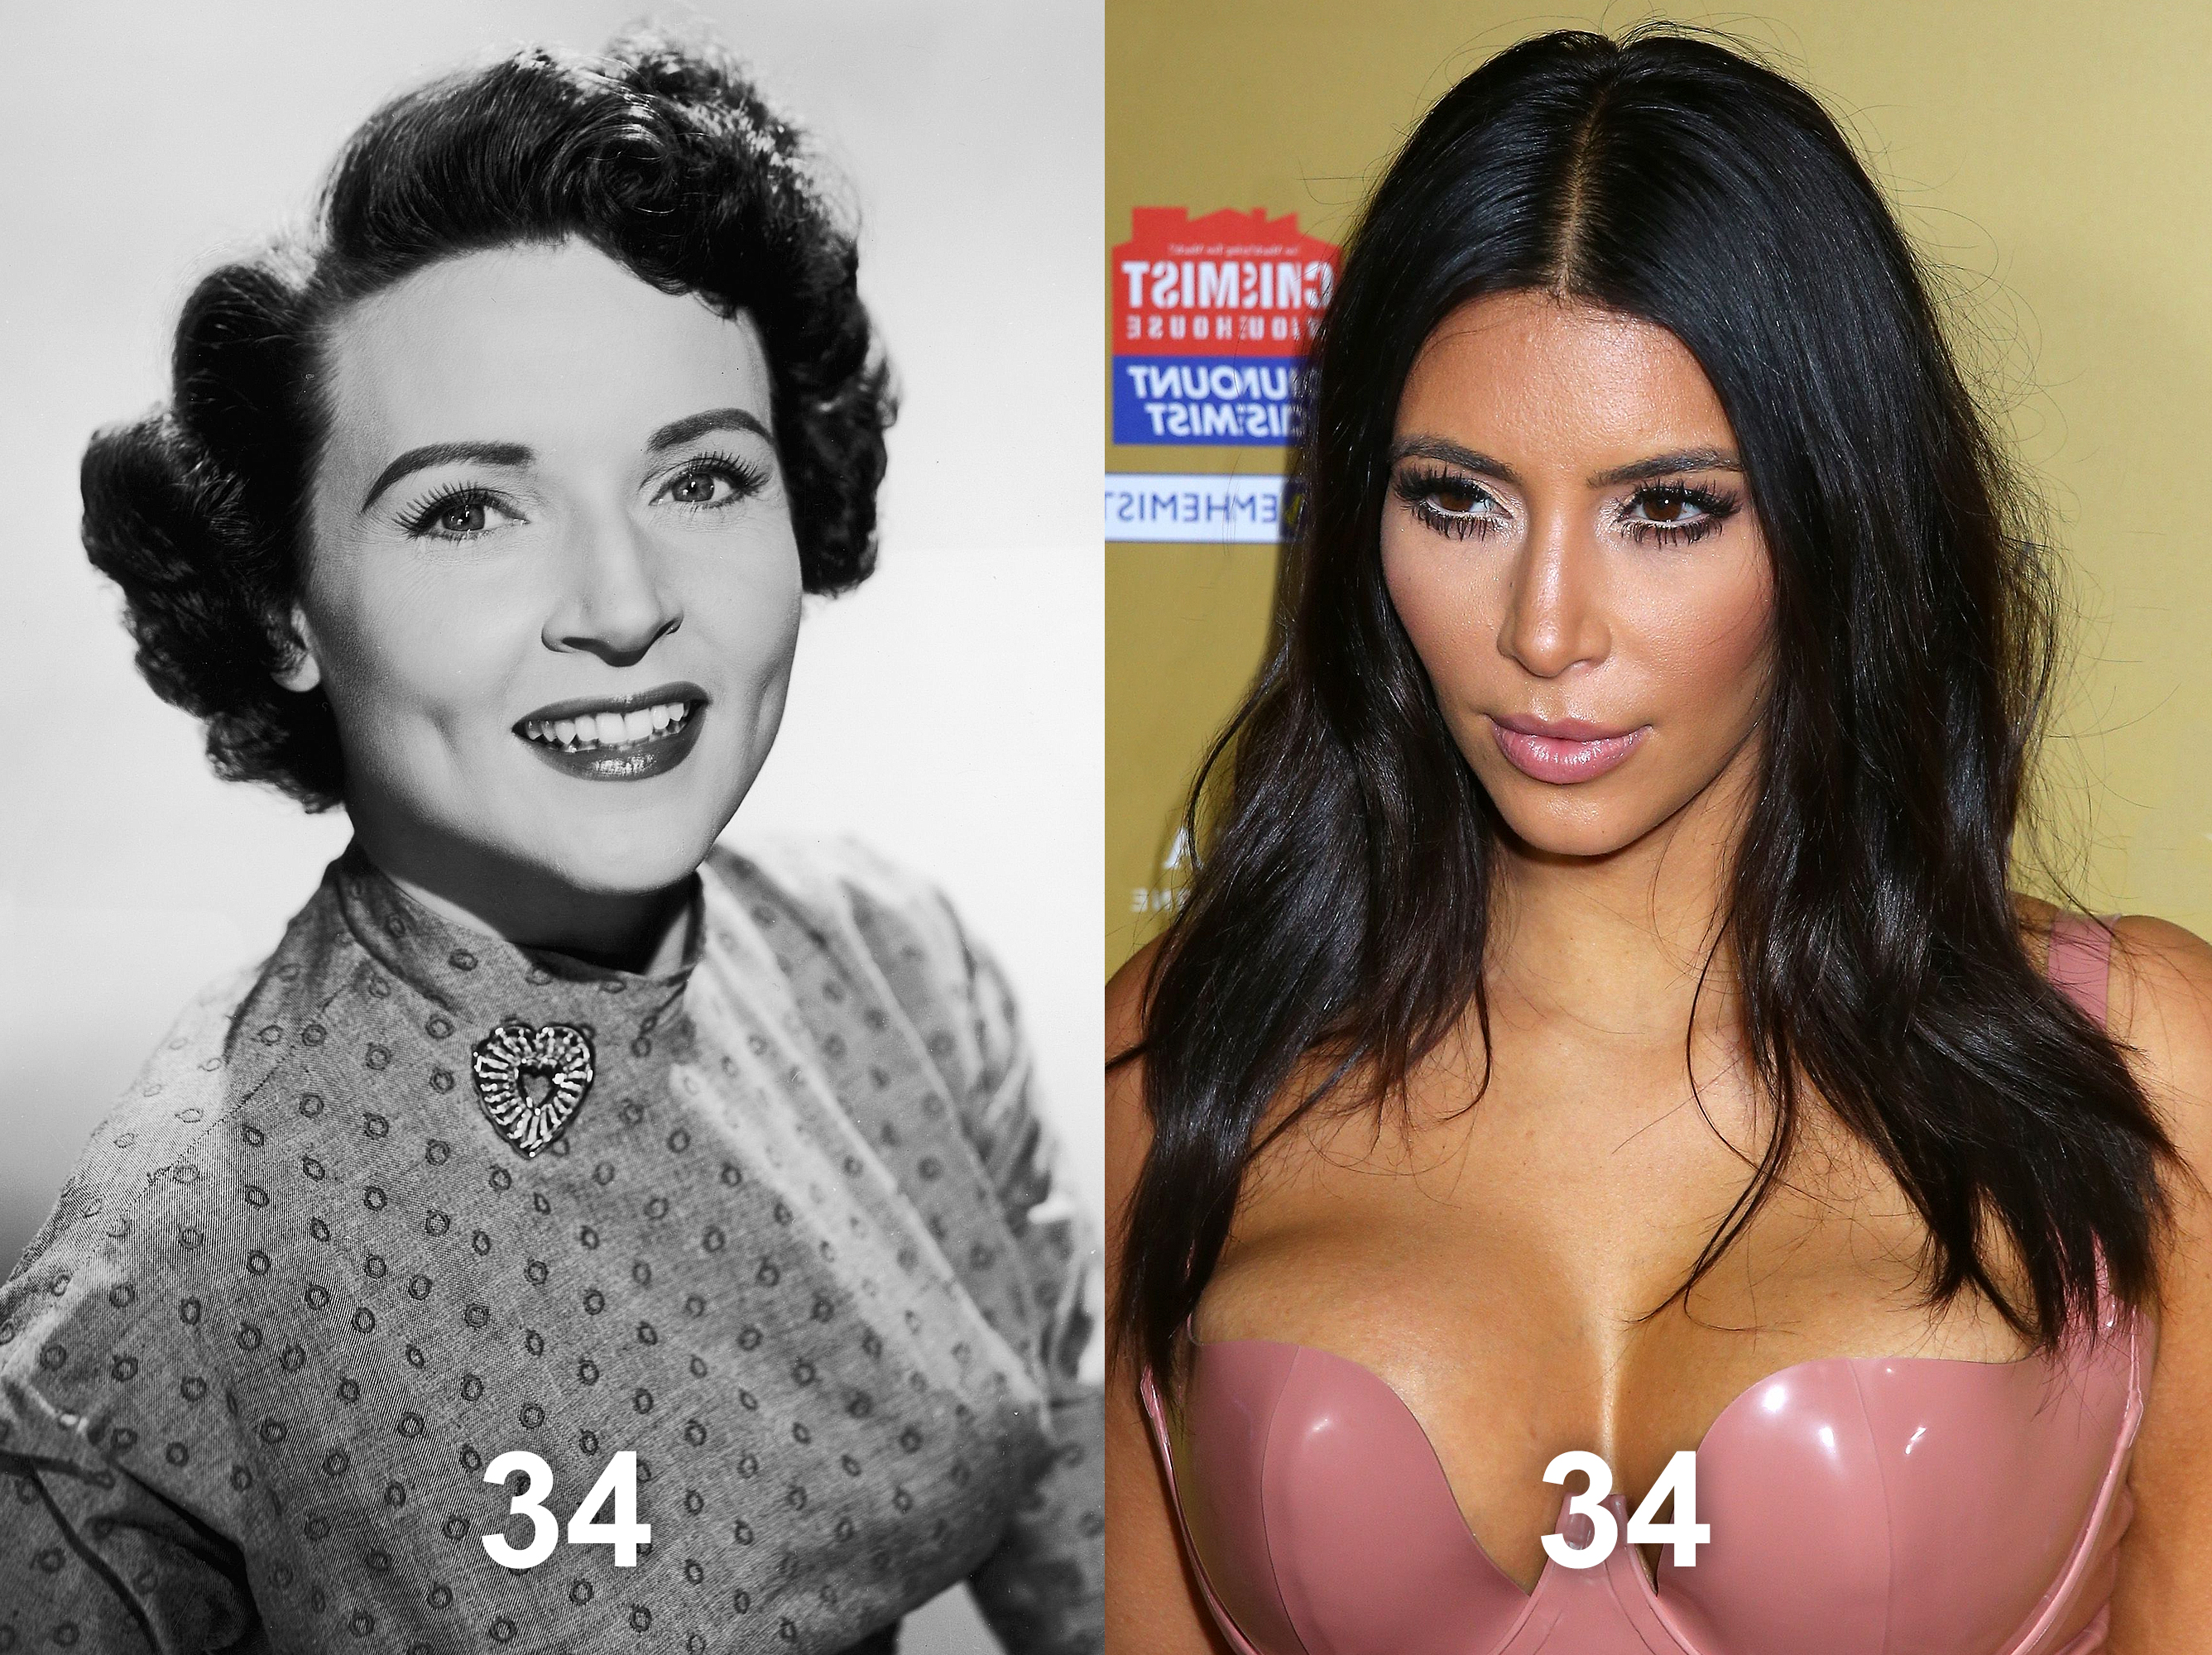 Betty White, vers 1955 | Kim Kardashian, 2014 | Source : Getty Images